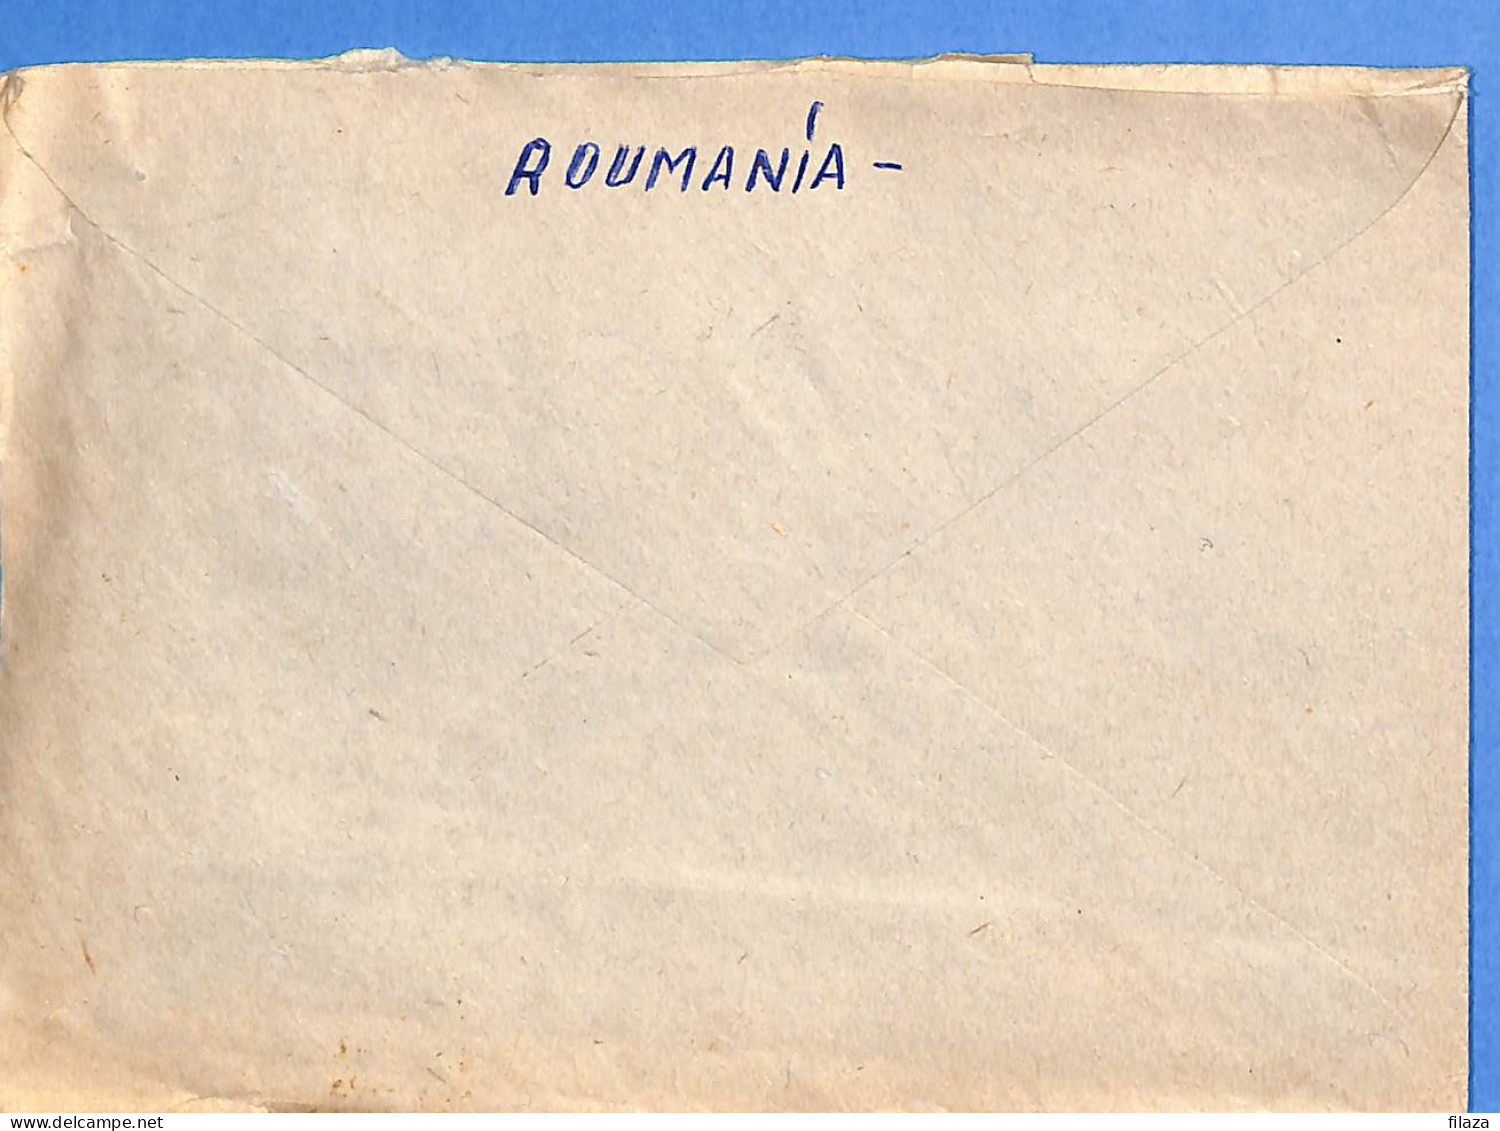 Lettre : Romania To Italy Singer DINO L00103 - Briefe U. Dokumente